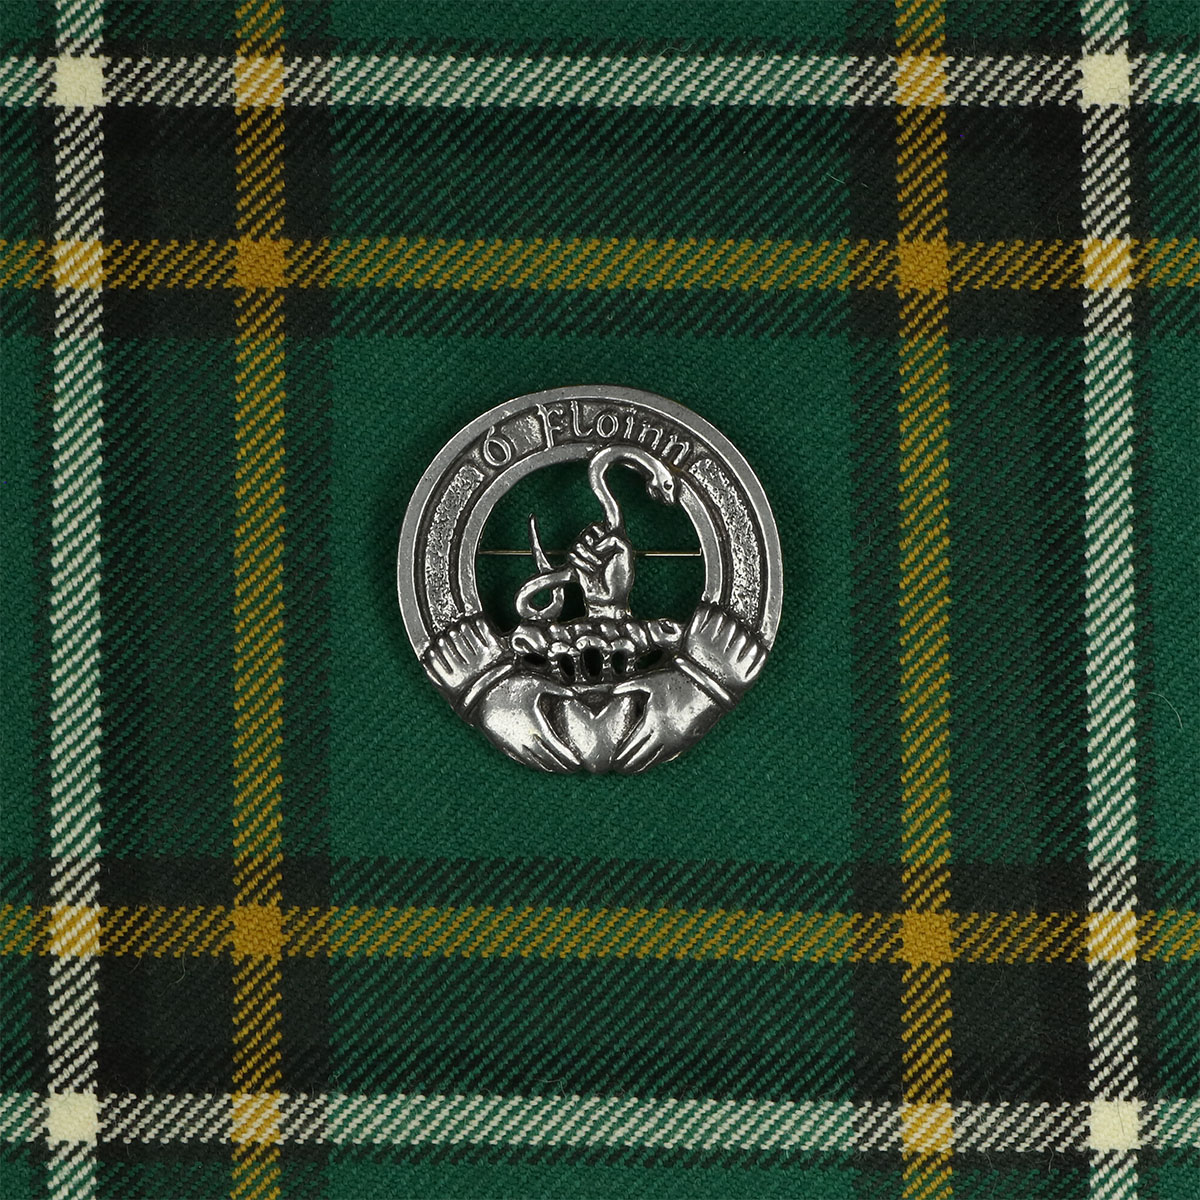 Clan Campbell Scottish Family Crest, Scotland Flag Scottish Gifts for the  Home Scottish Campbell Clan Flag -  Ireland